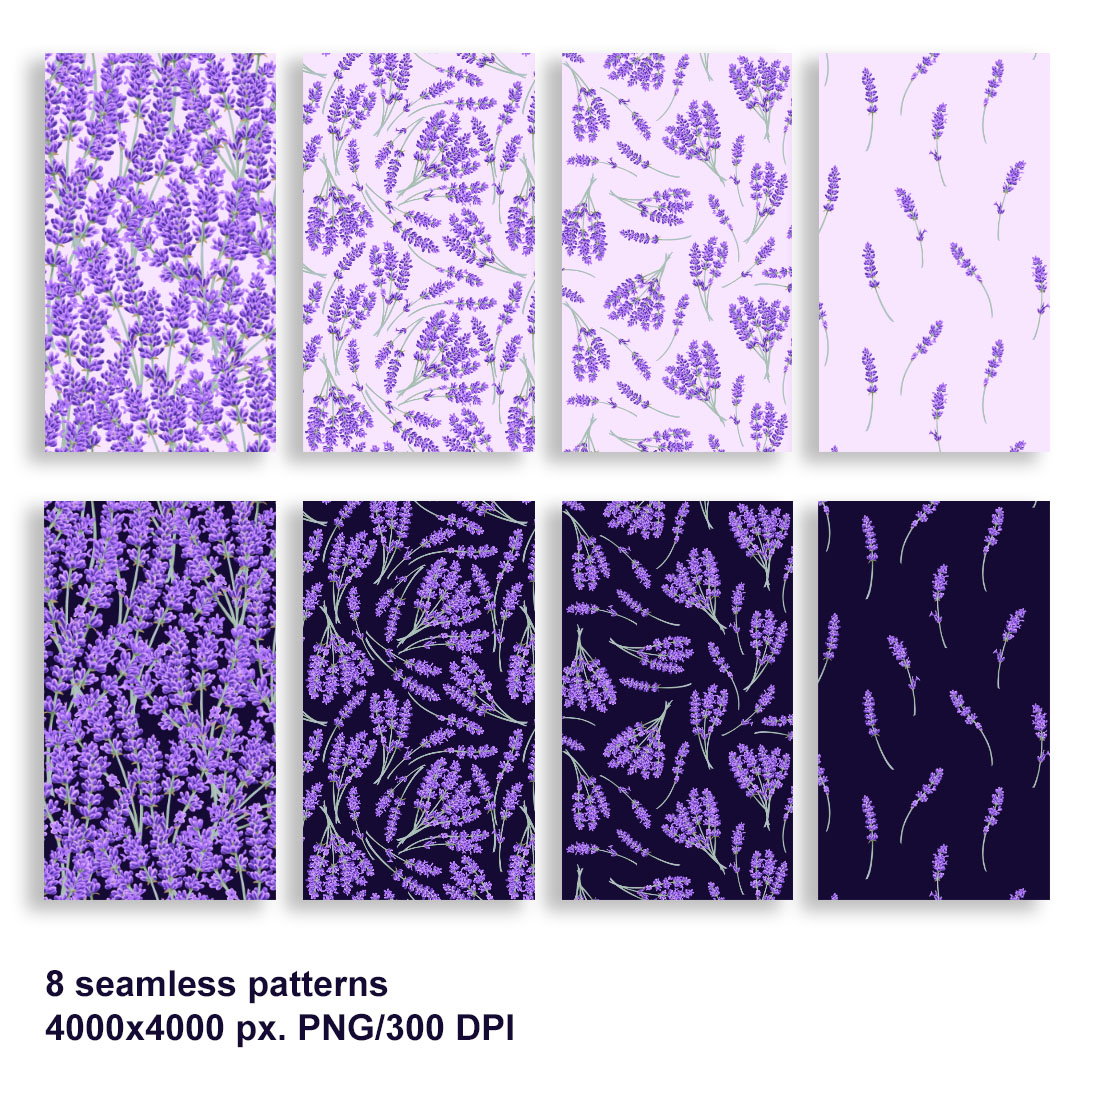 Lavender patterns preview image.